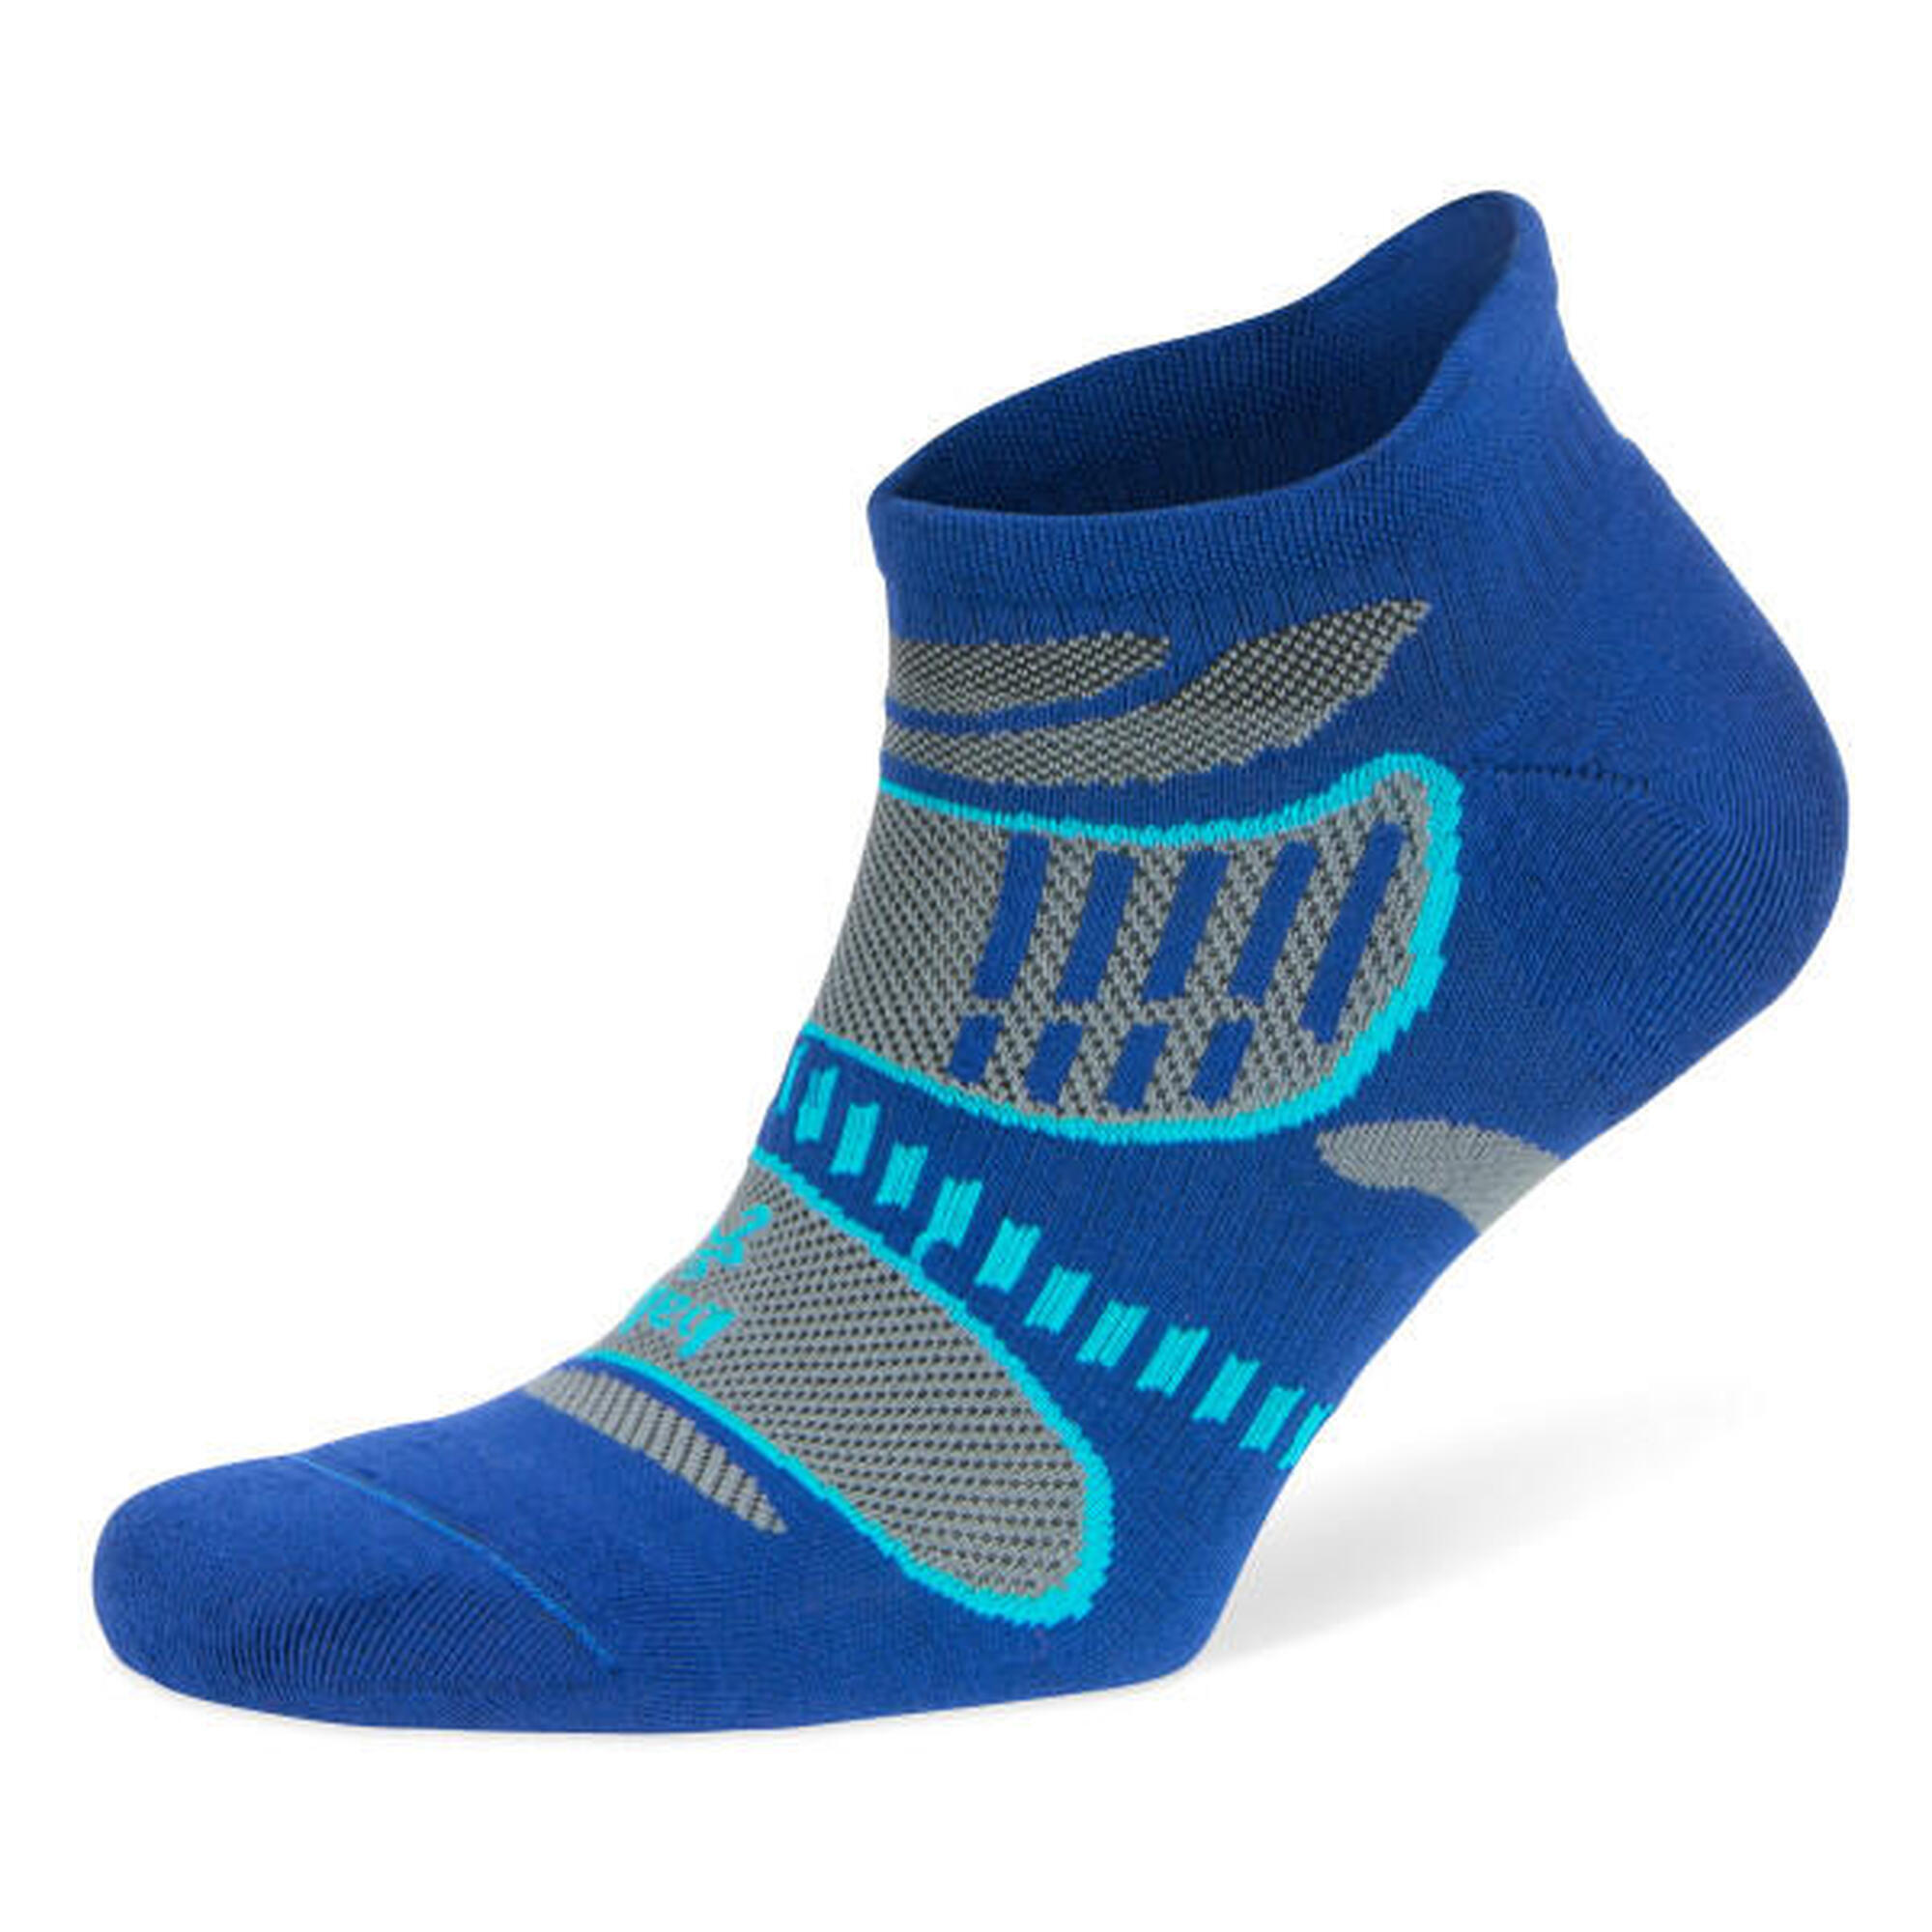 Balega running calcetines: Ligereza, control de la humedad y confort Talla L